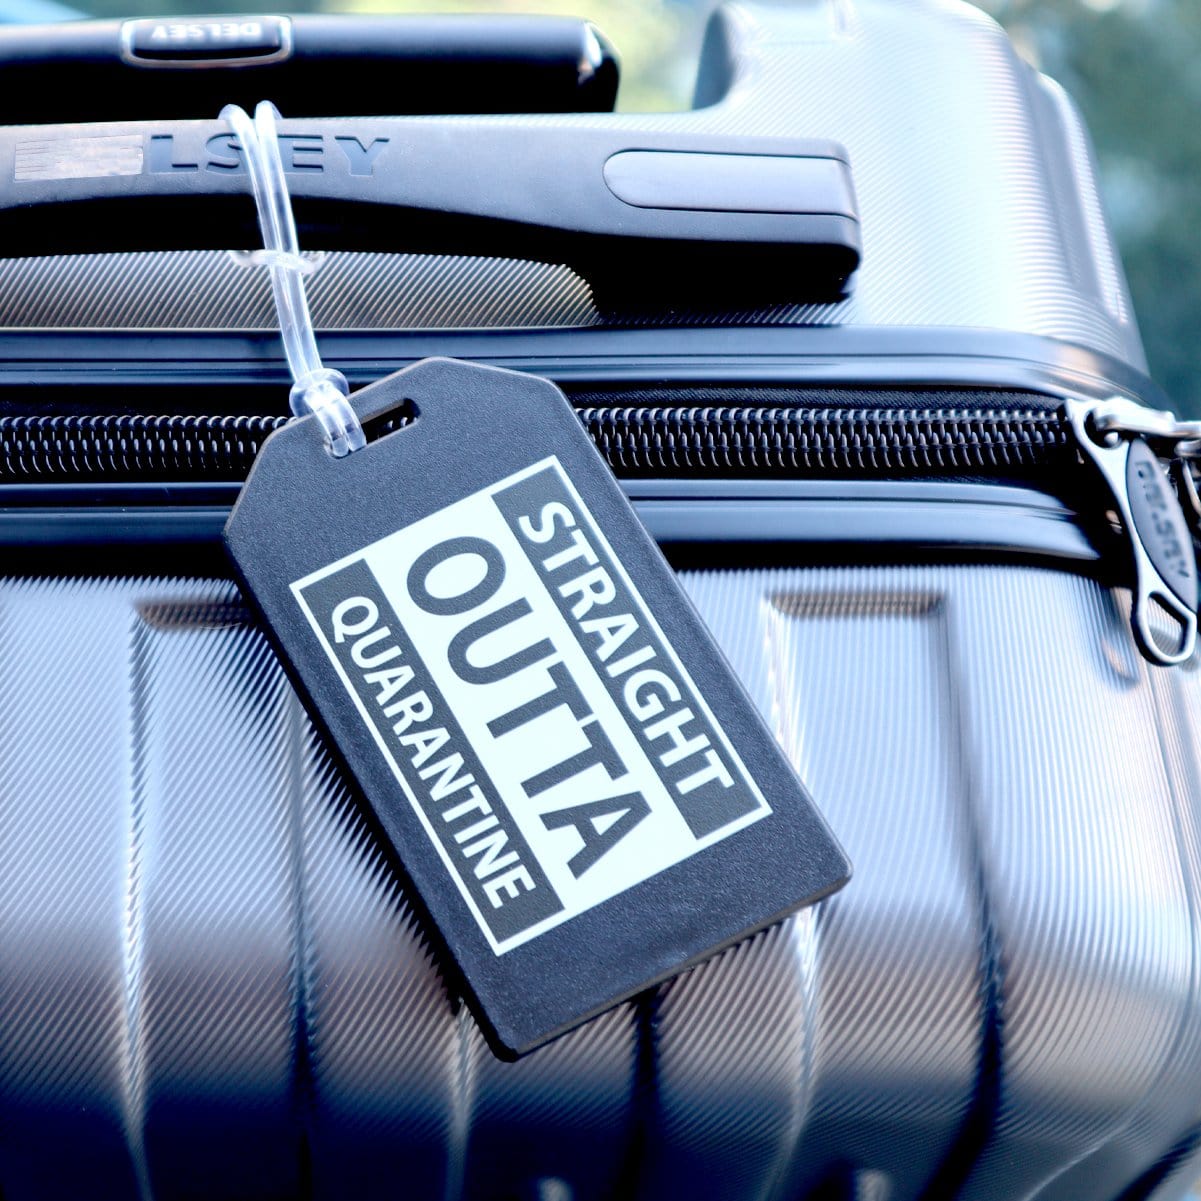 2 Pack - STRAIGHT OUTTA QUARANTINE Luggage Tags with Plastic Loop Ties - Bag Tag Identifier SPID-10010-BLACK-Q2